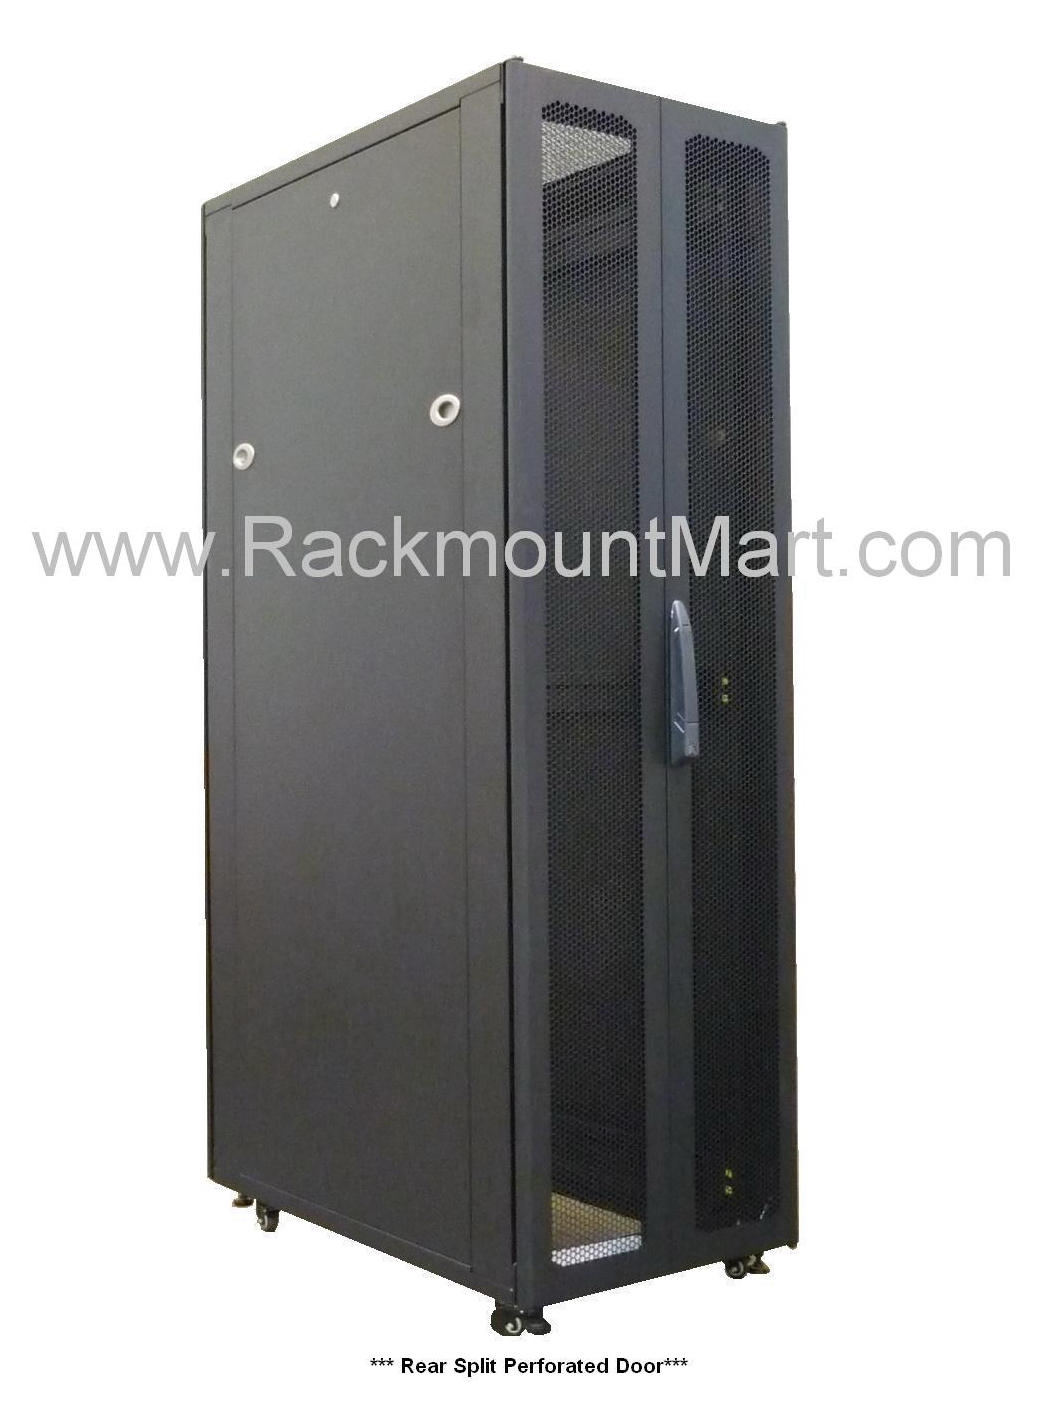 47U Server Racks CR1686 CR1086